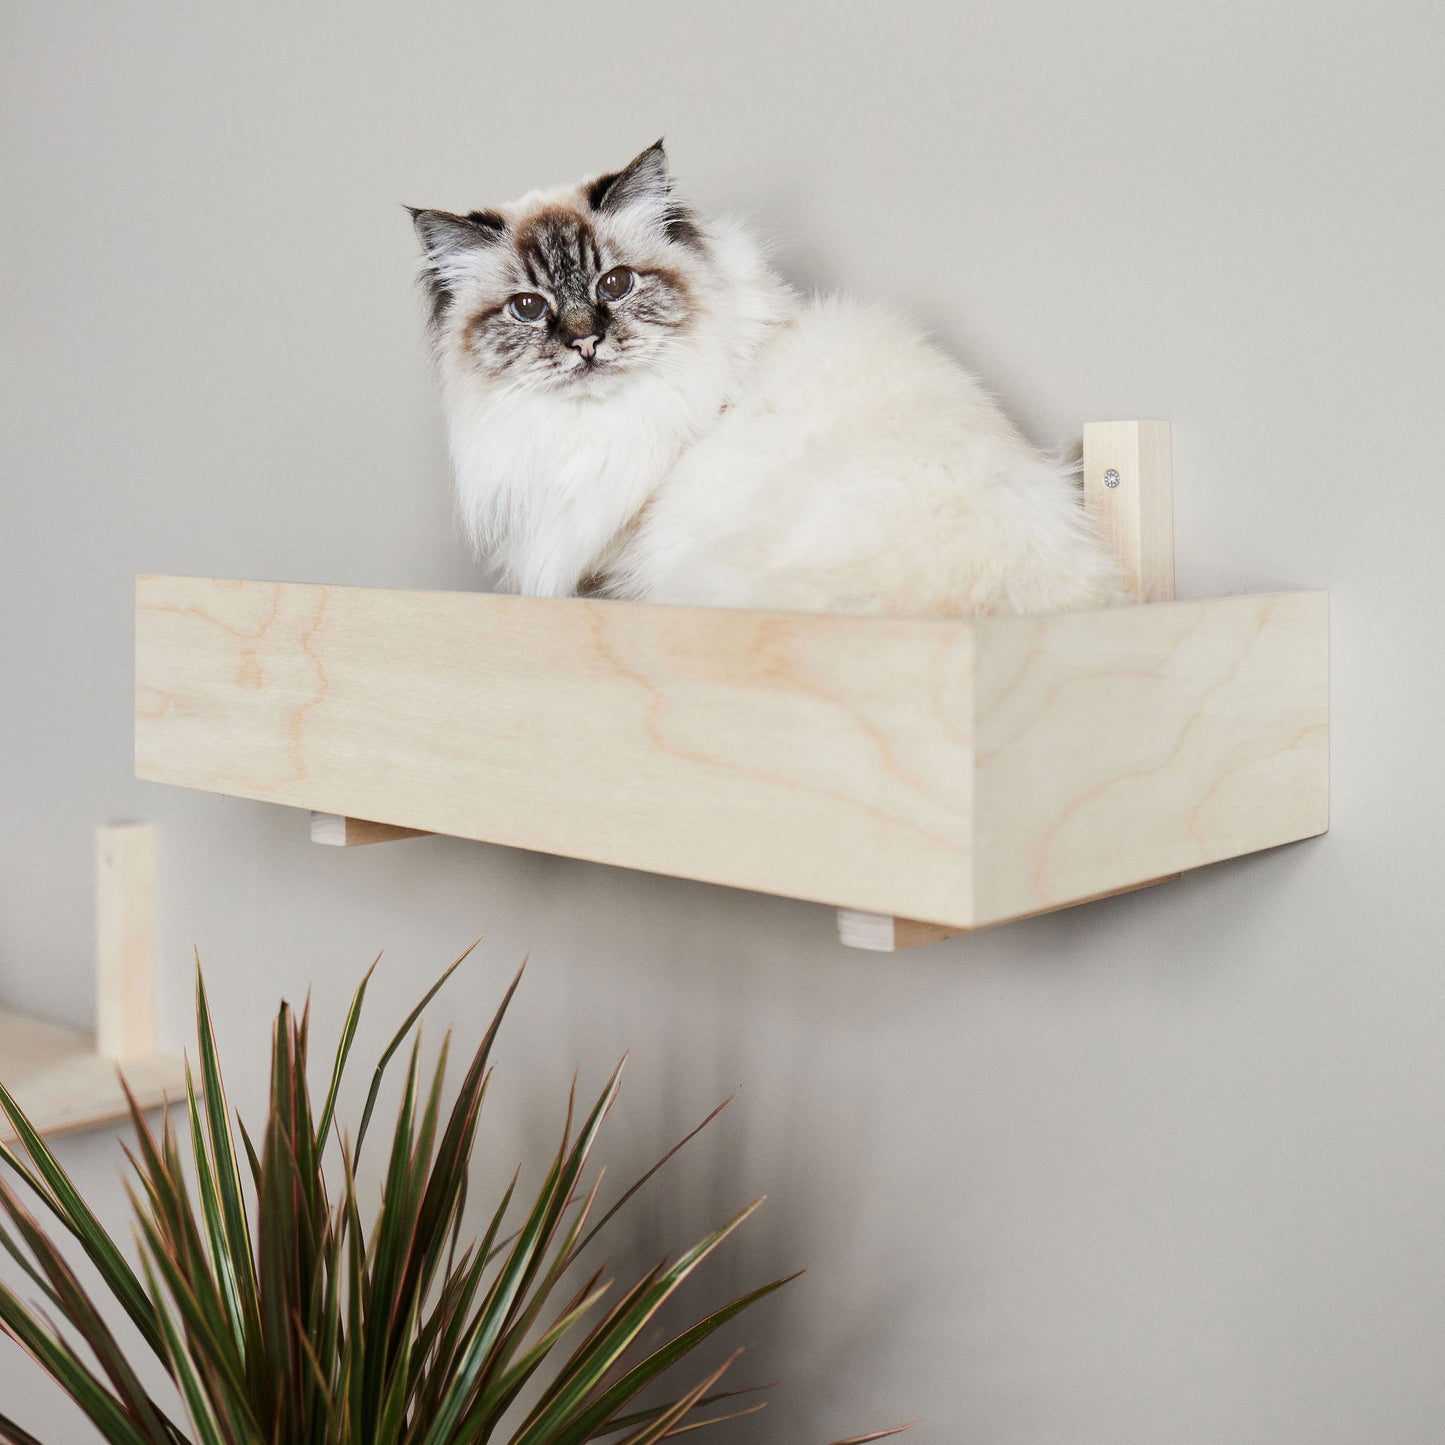 Kissapuu cat wall shelf, corner edge